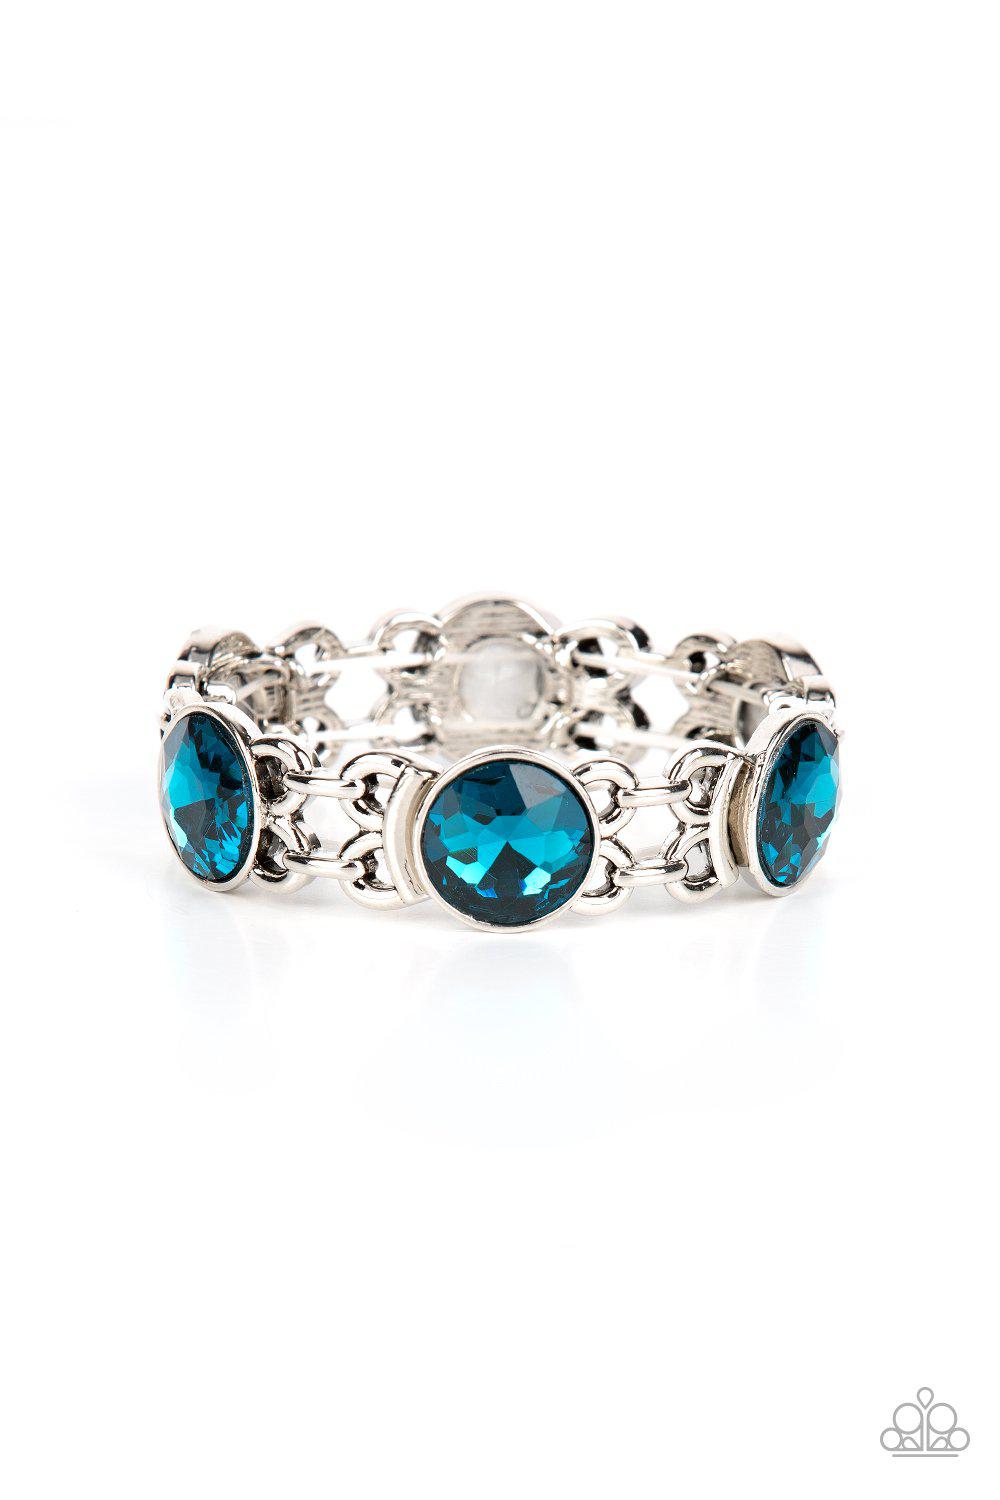 Devoted To Drama Blue Rhinestone Bracelet - Paparazzi Accessories- lightbox - CarasShop.com - $5 Jewelry by Cara Jewels